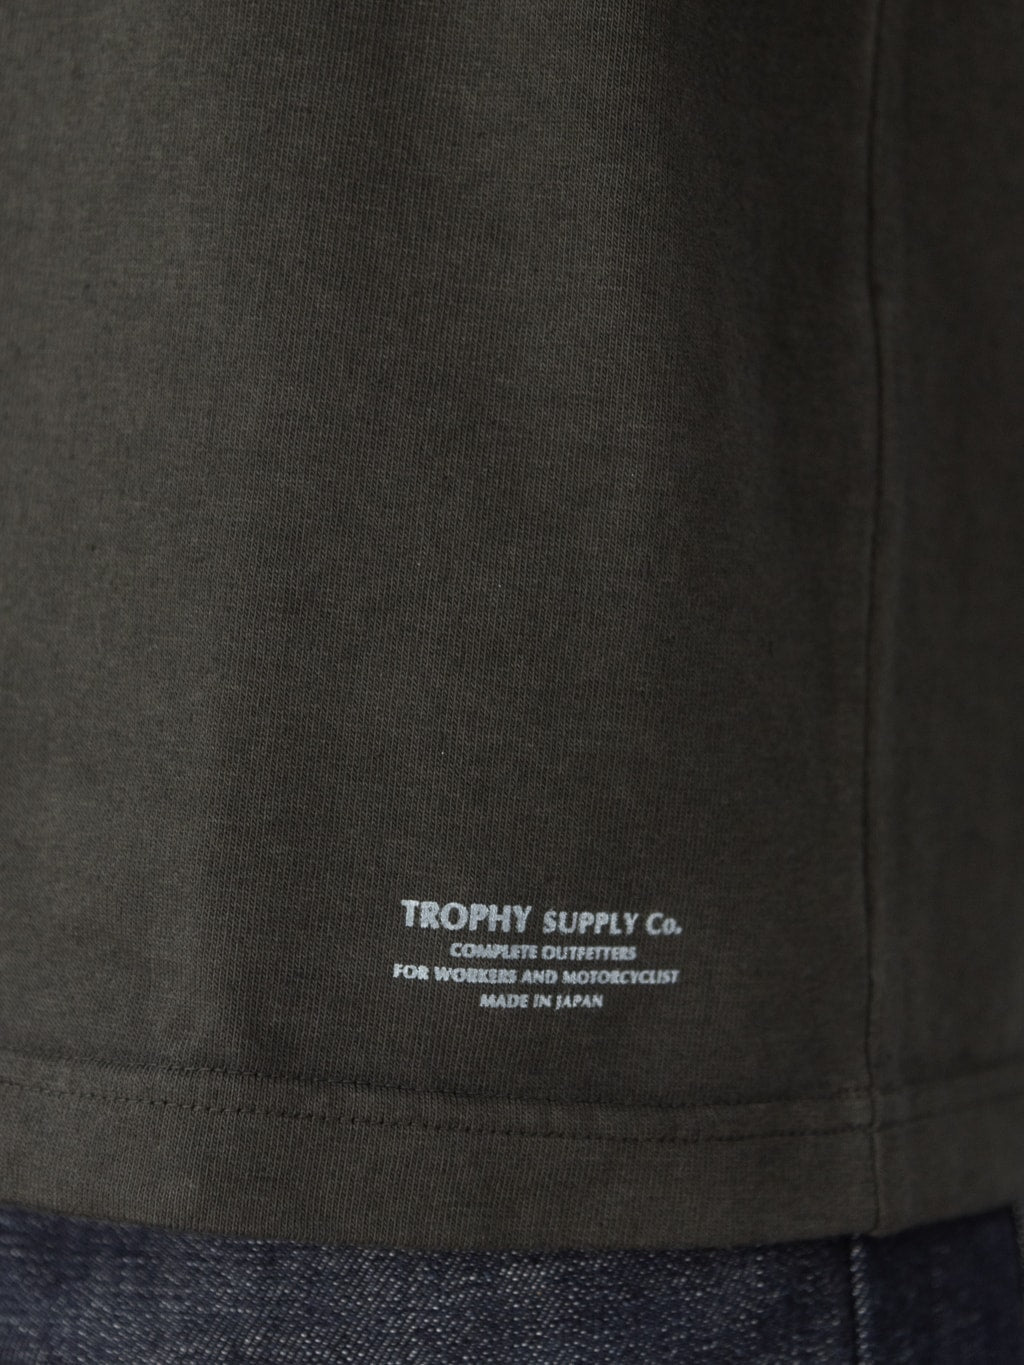 trophy clothing od henley tee black branding hem